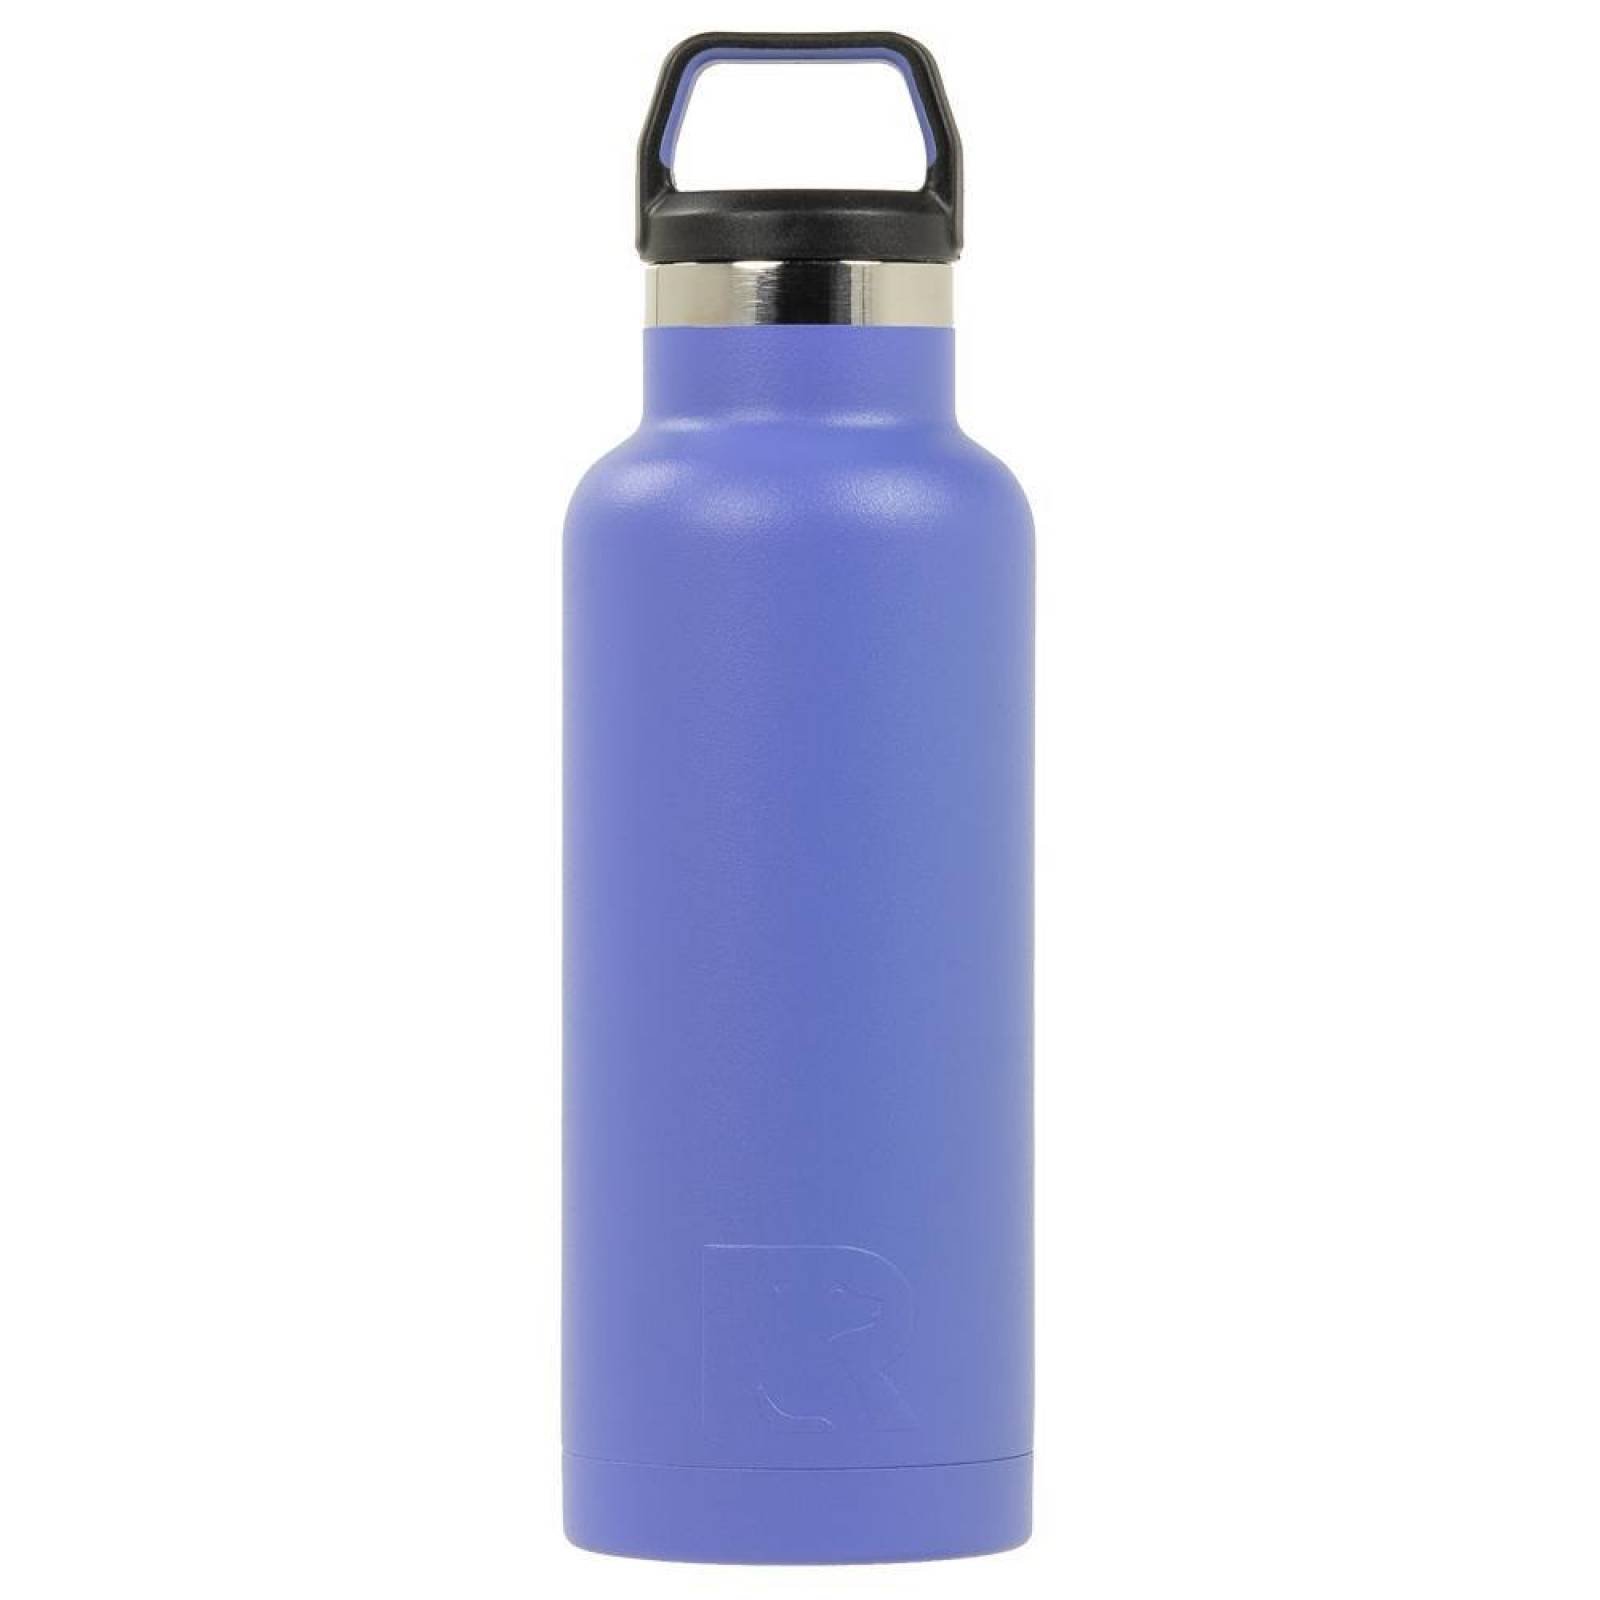 RTIC Water Bottle 16 oz. Lilac Matte   1003